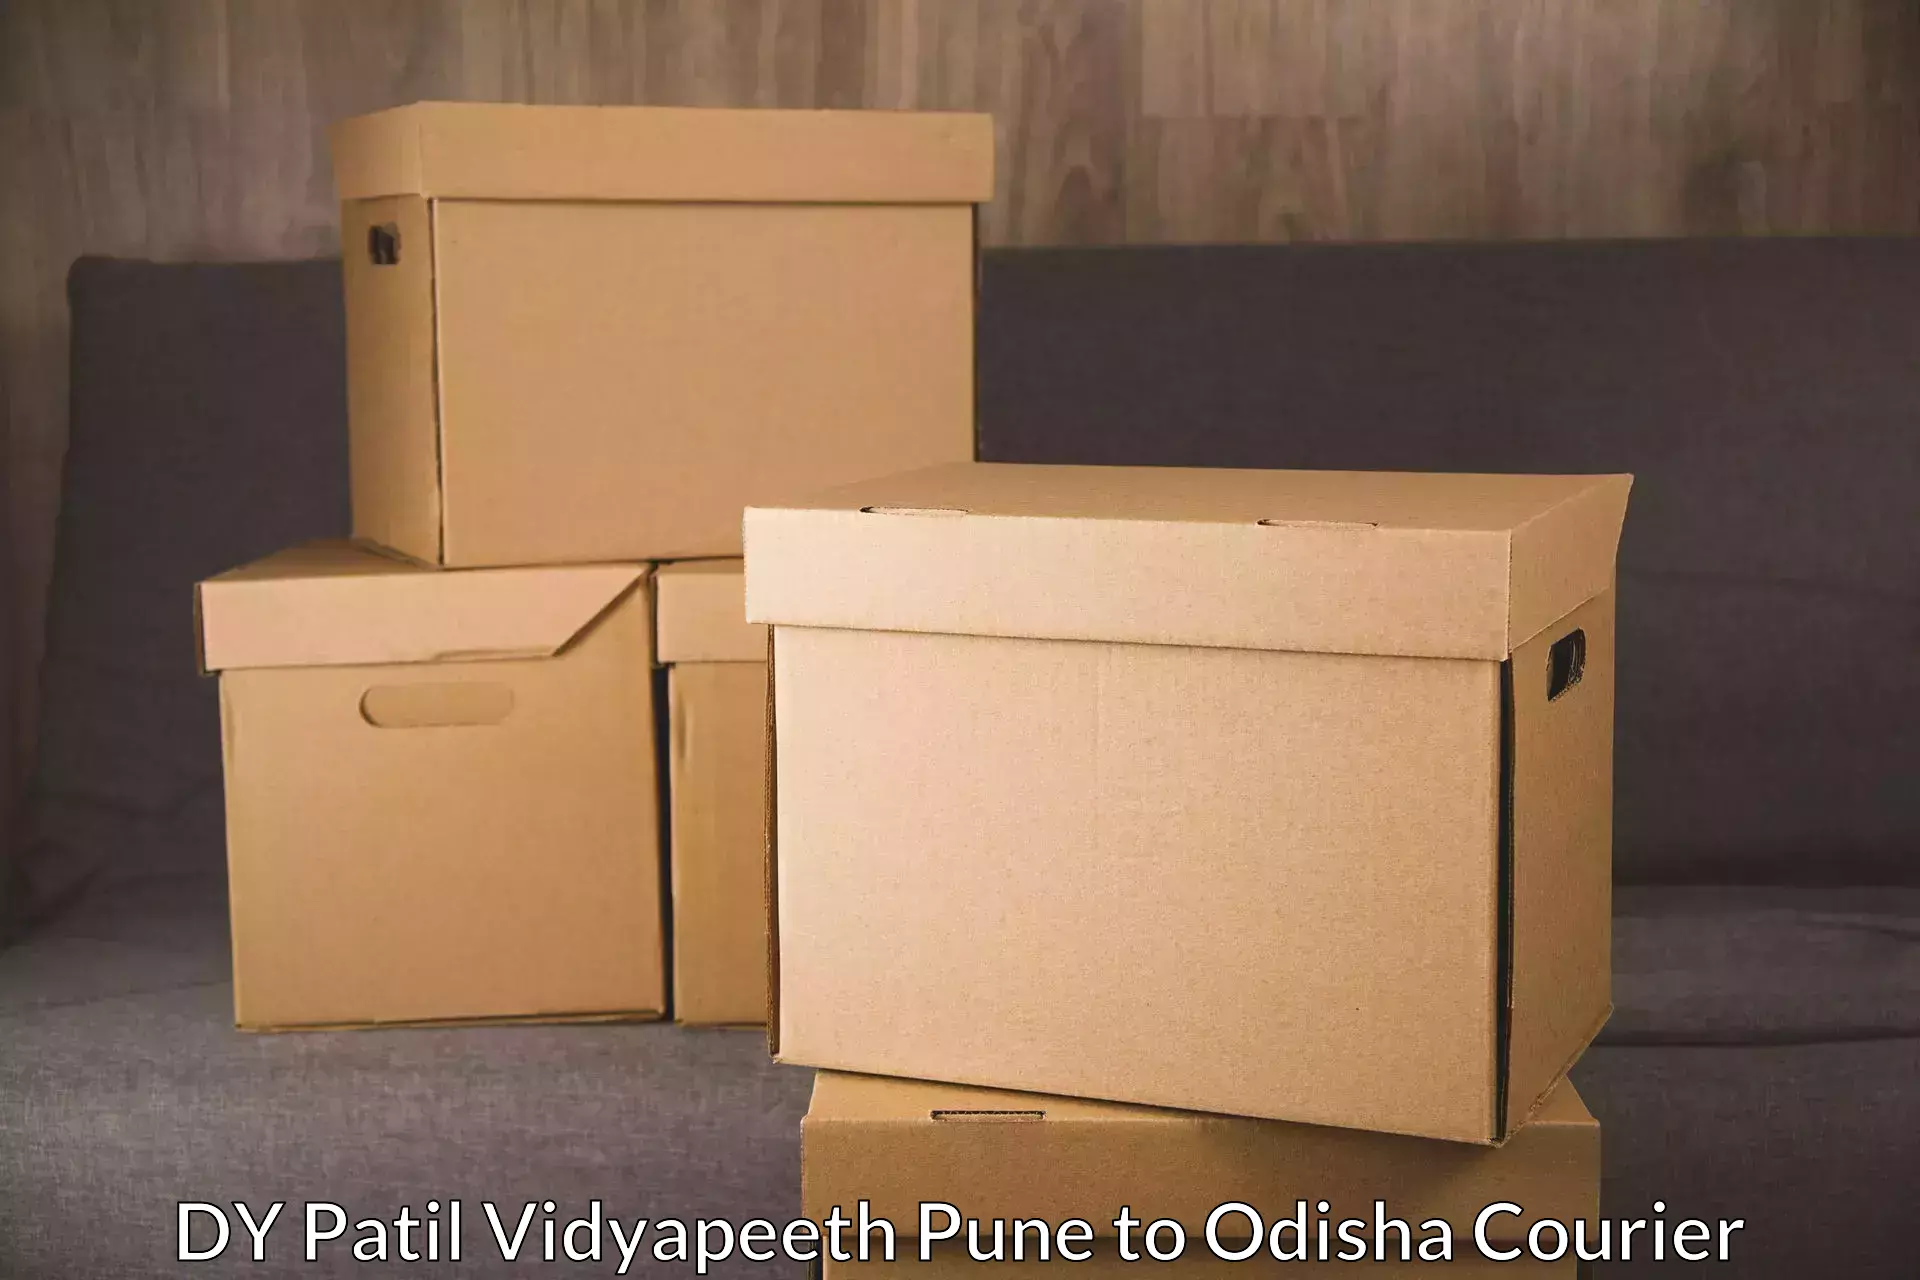 Speedy delivery service DY Patil Vidyapeeth Pune to Talcher